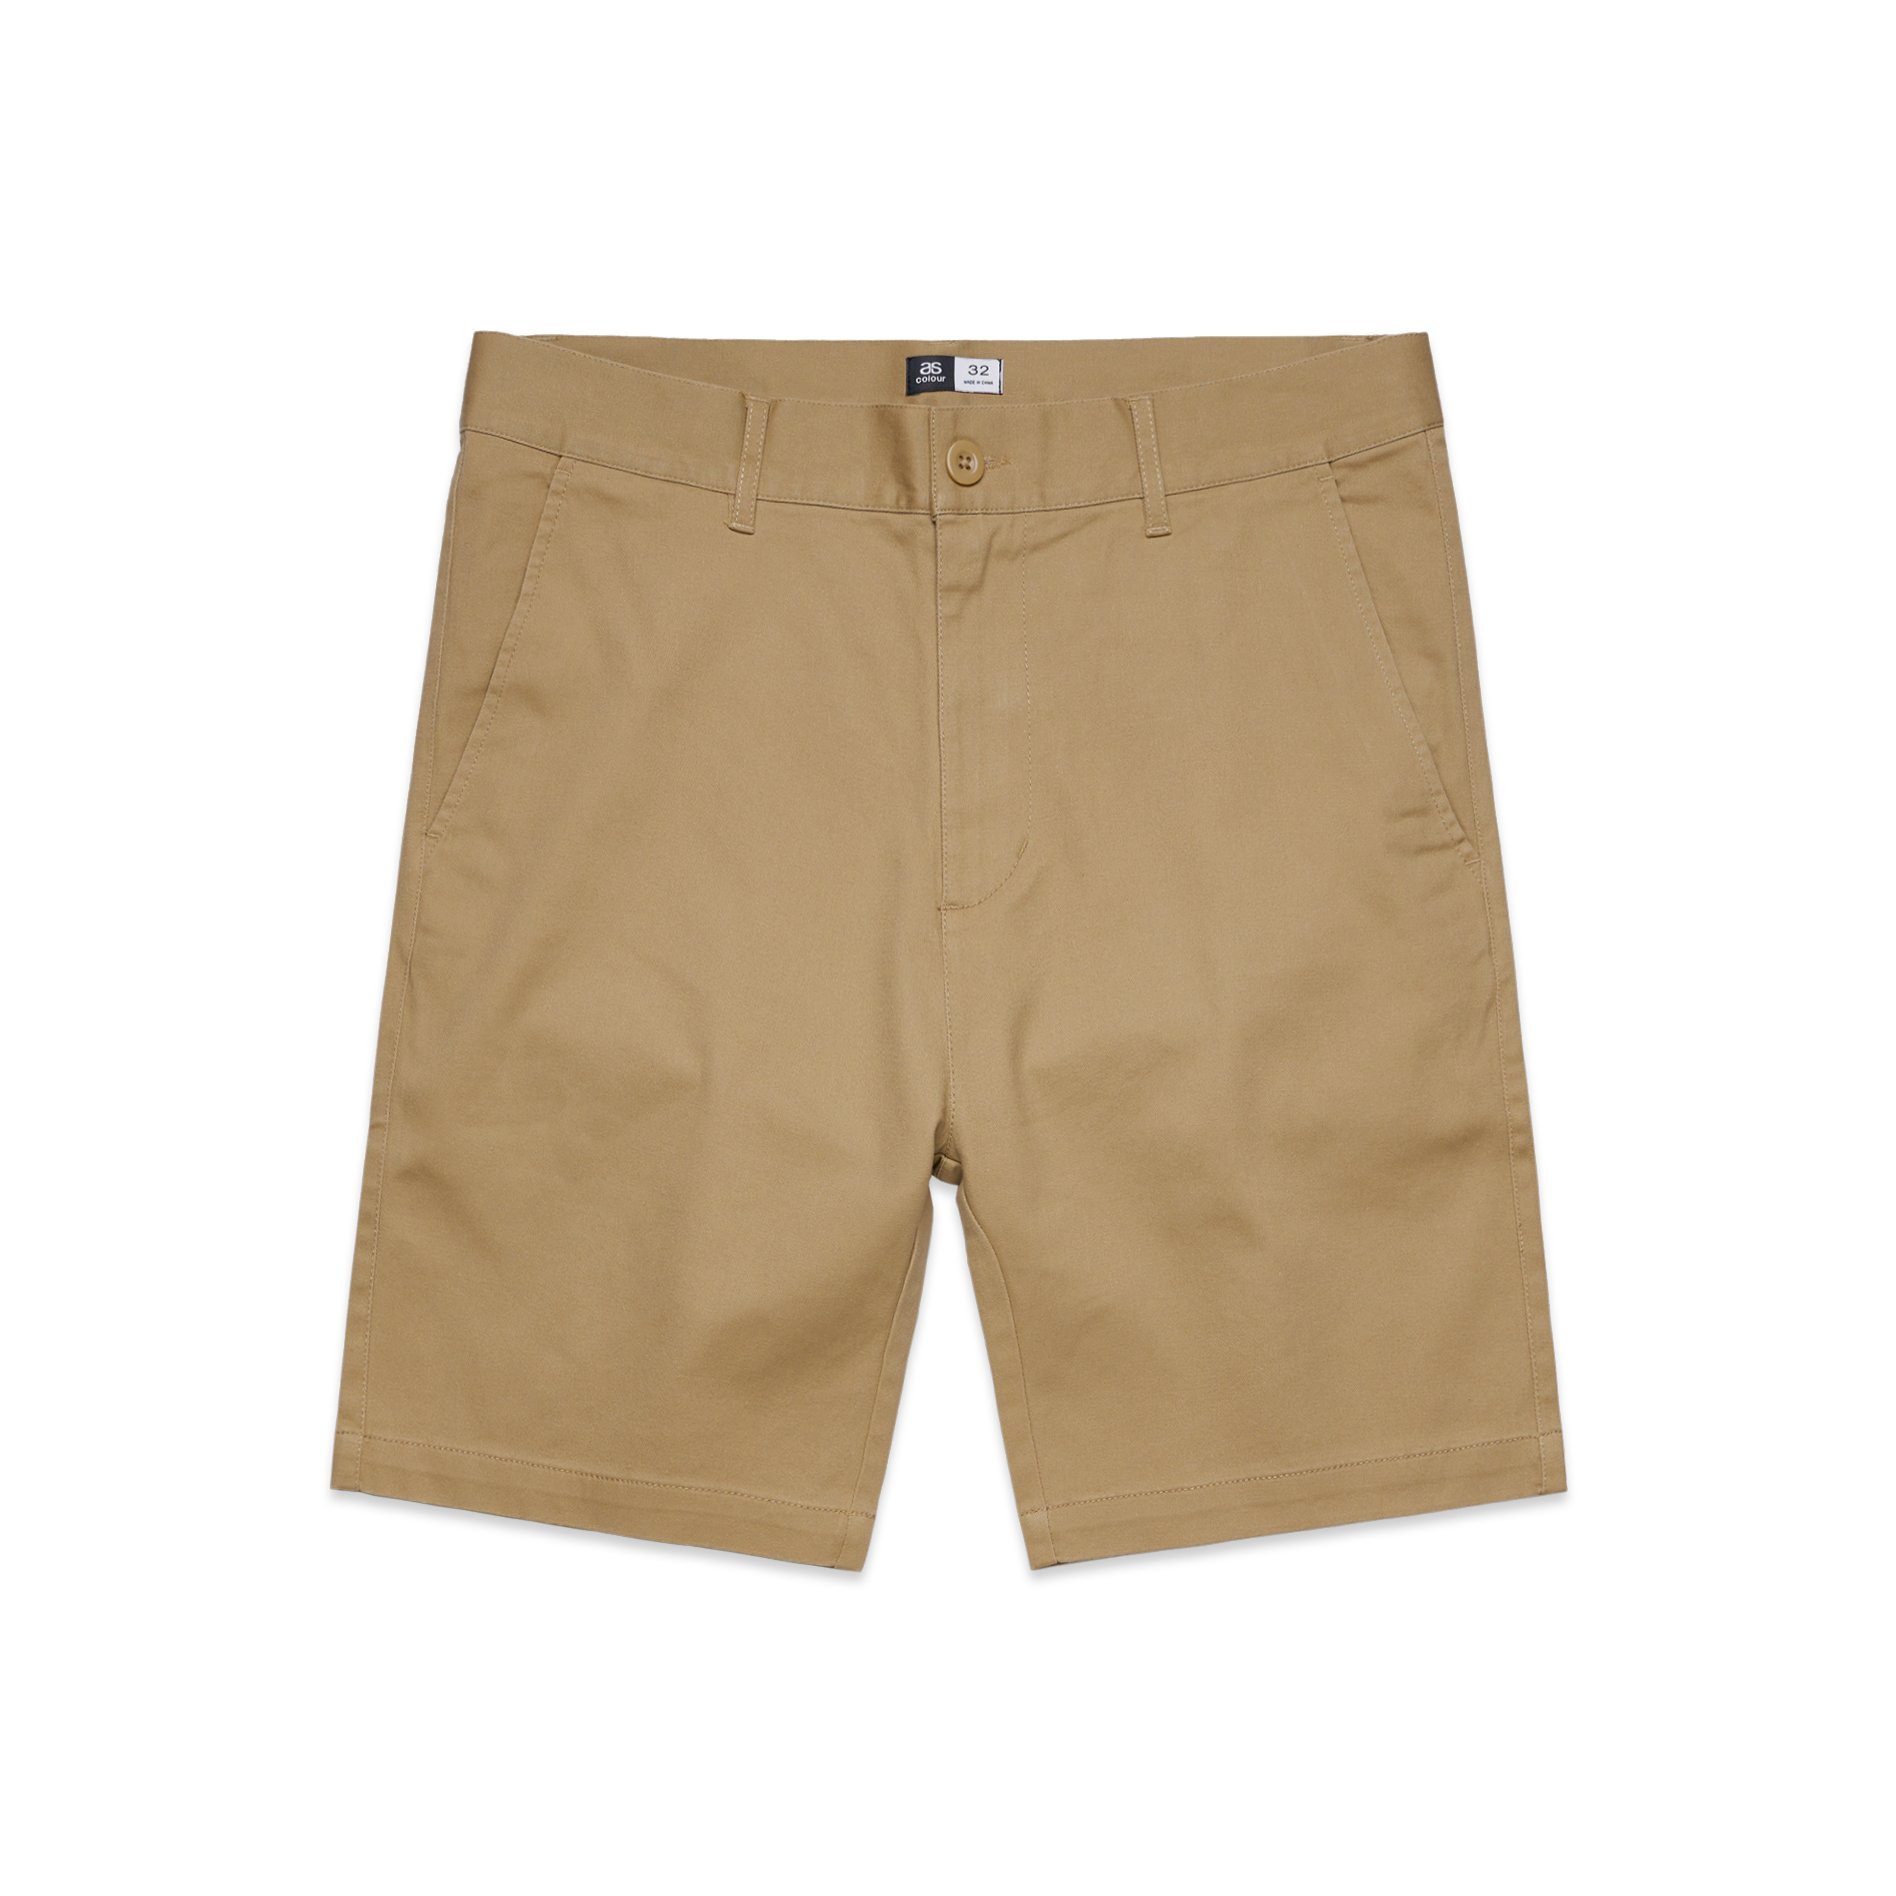 AS Colour Plain Shorts - 5902